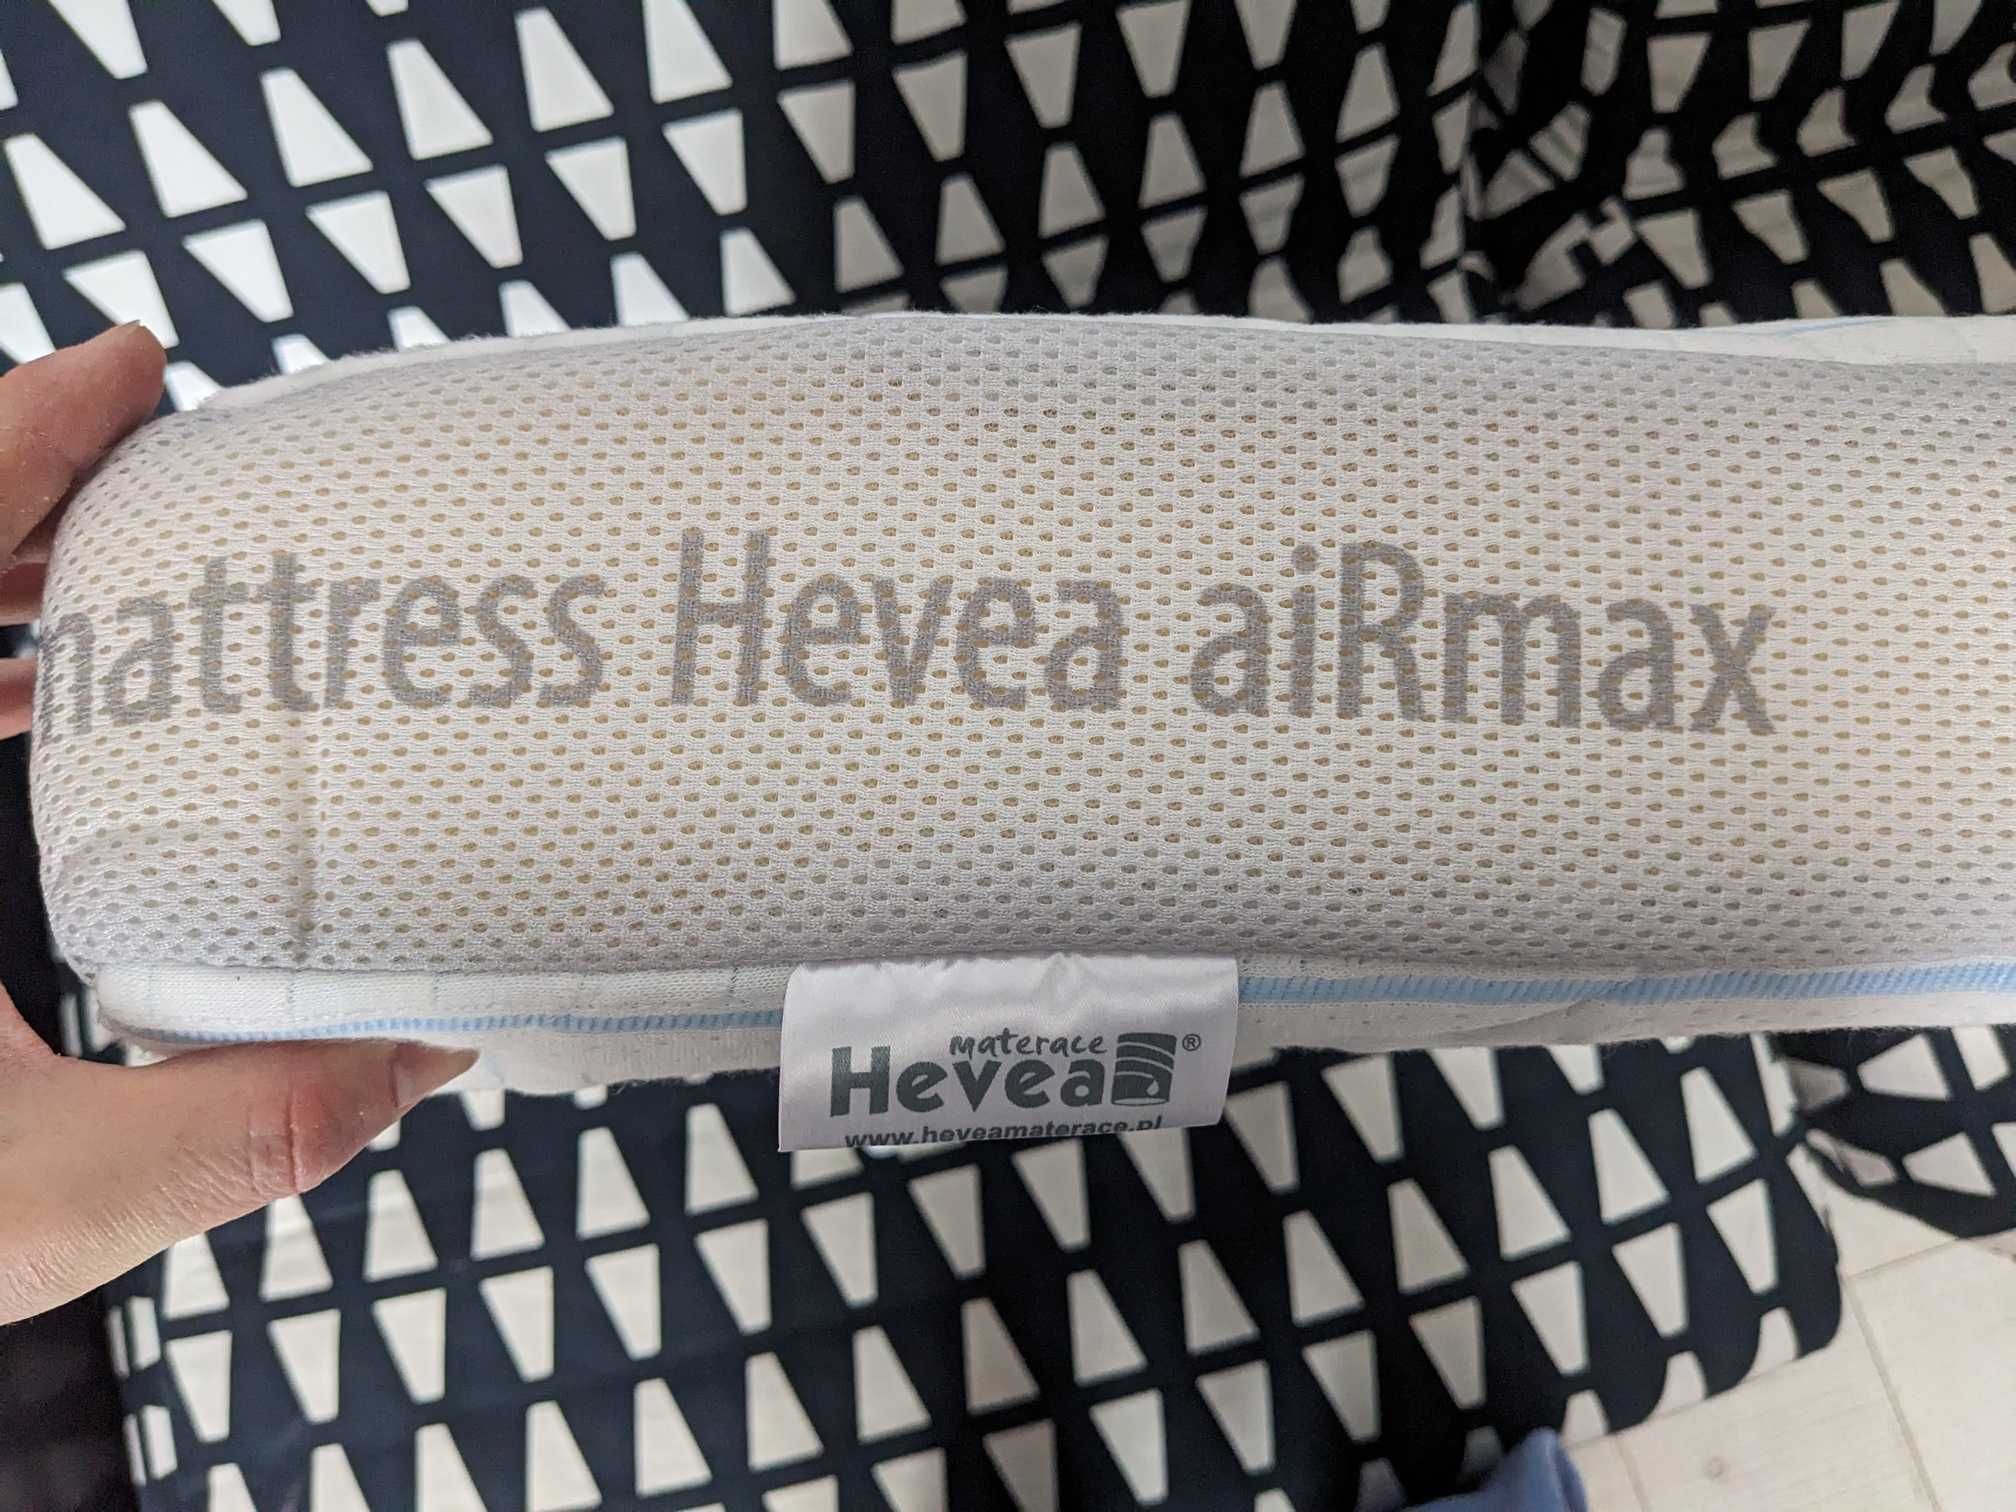 Materac piankowy 120x60 - Hevea airmax